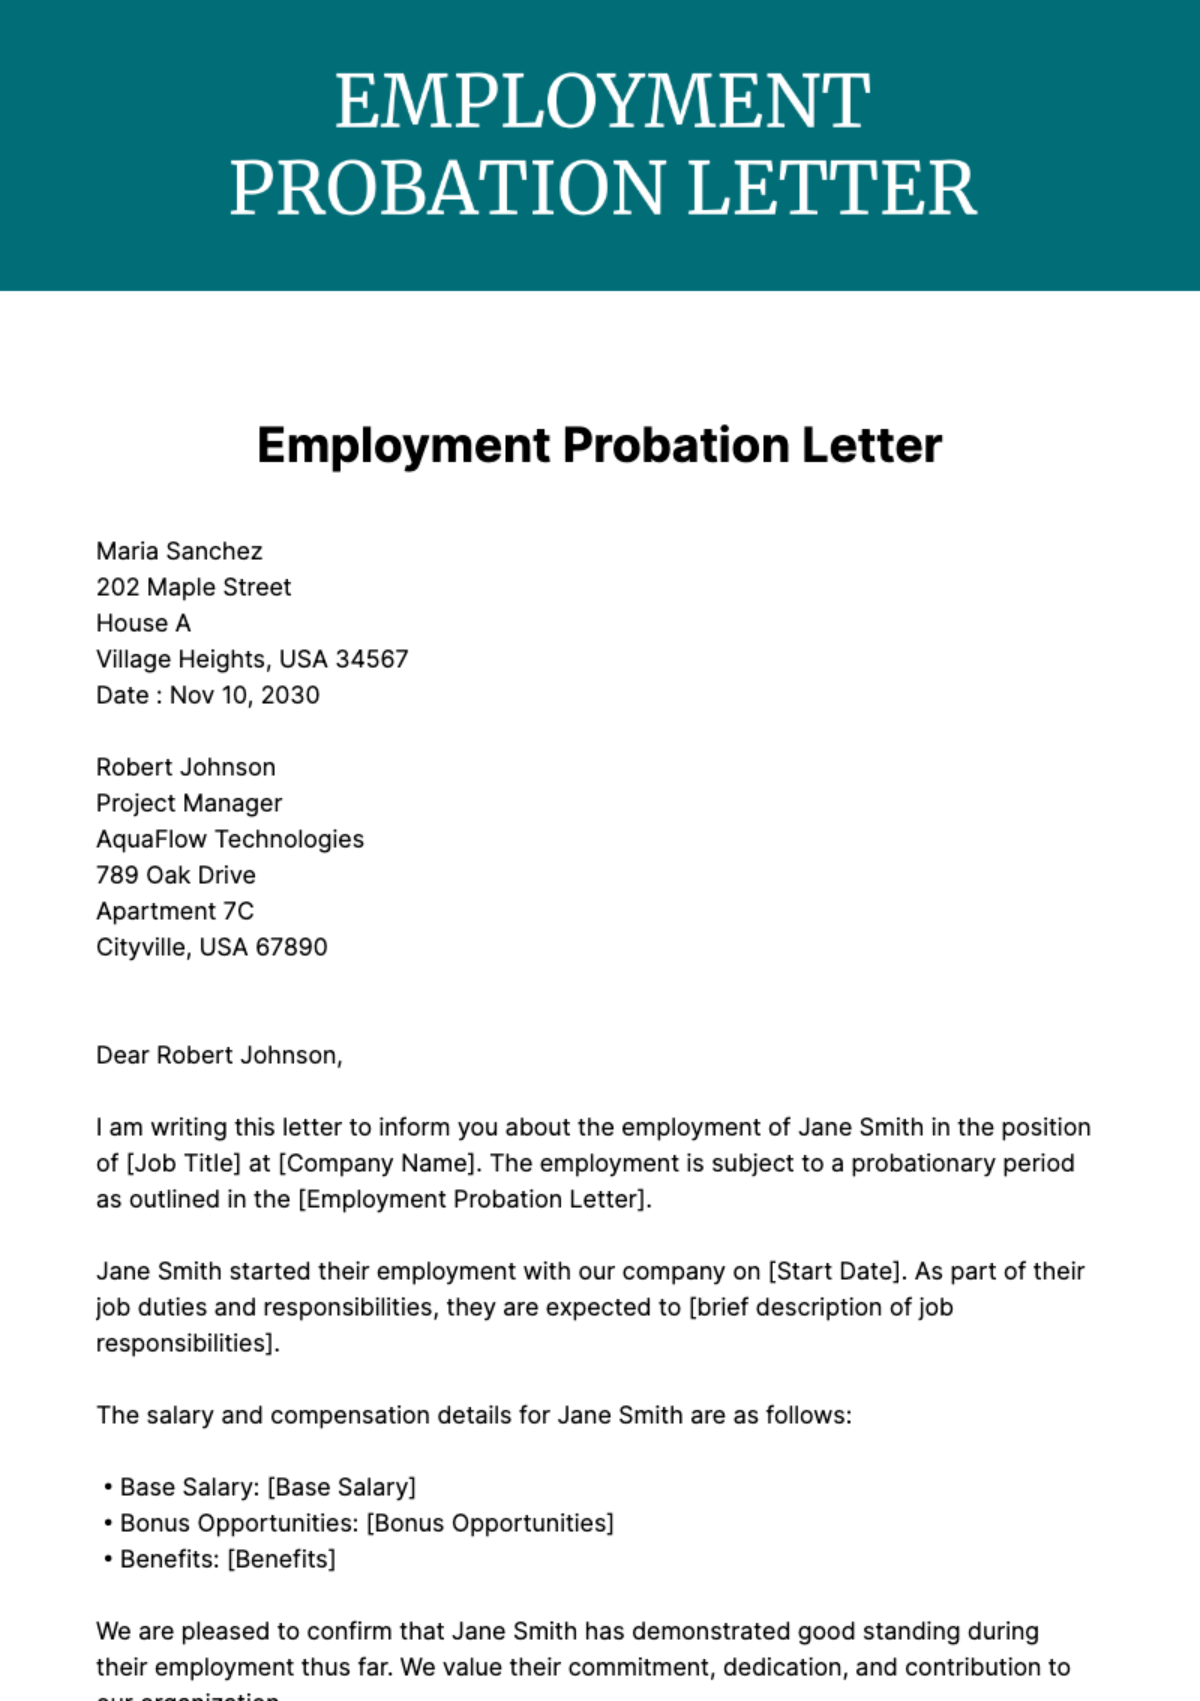 Employment Probation Letter Template